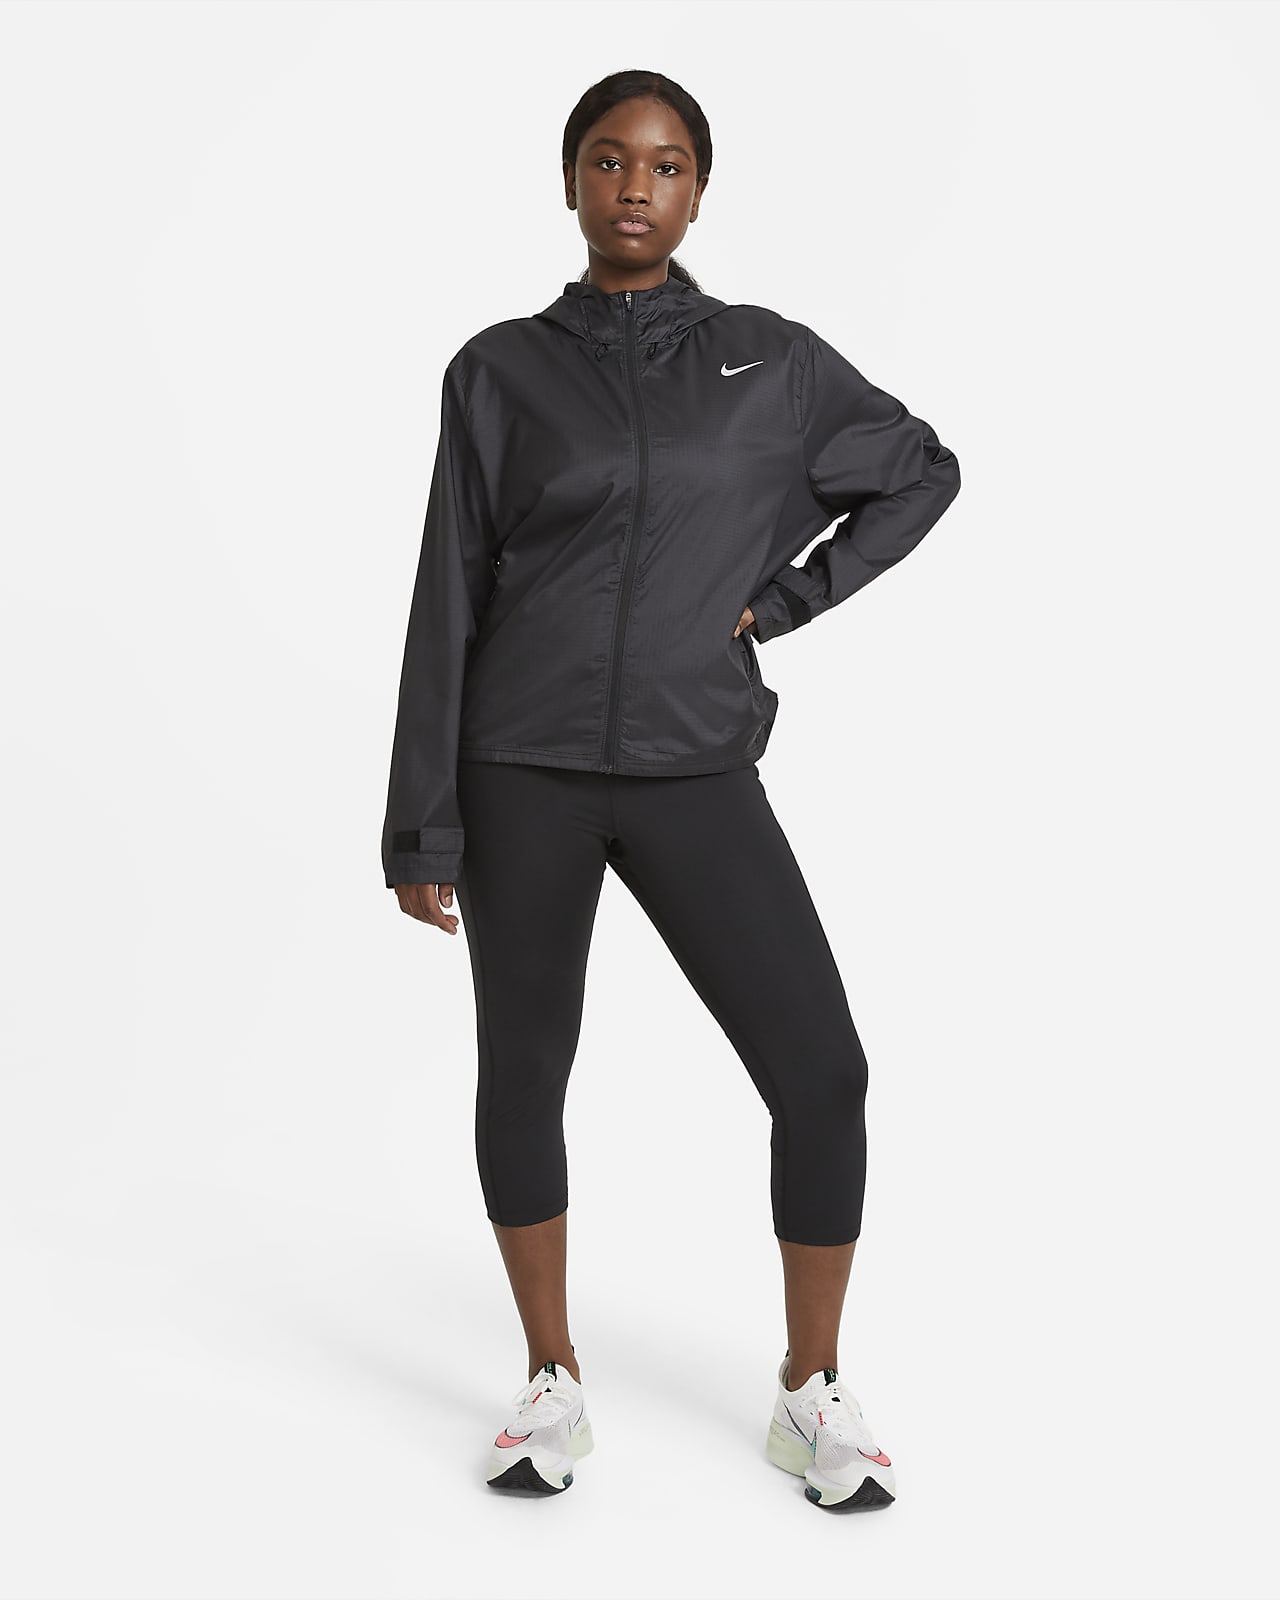 Nike Power Sprinter Running Mid Rise Crop Capri Leggings in Black Size  Small - $23 - From Terryl D